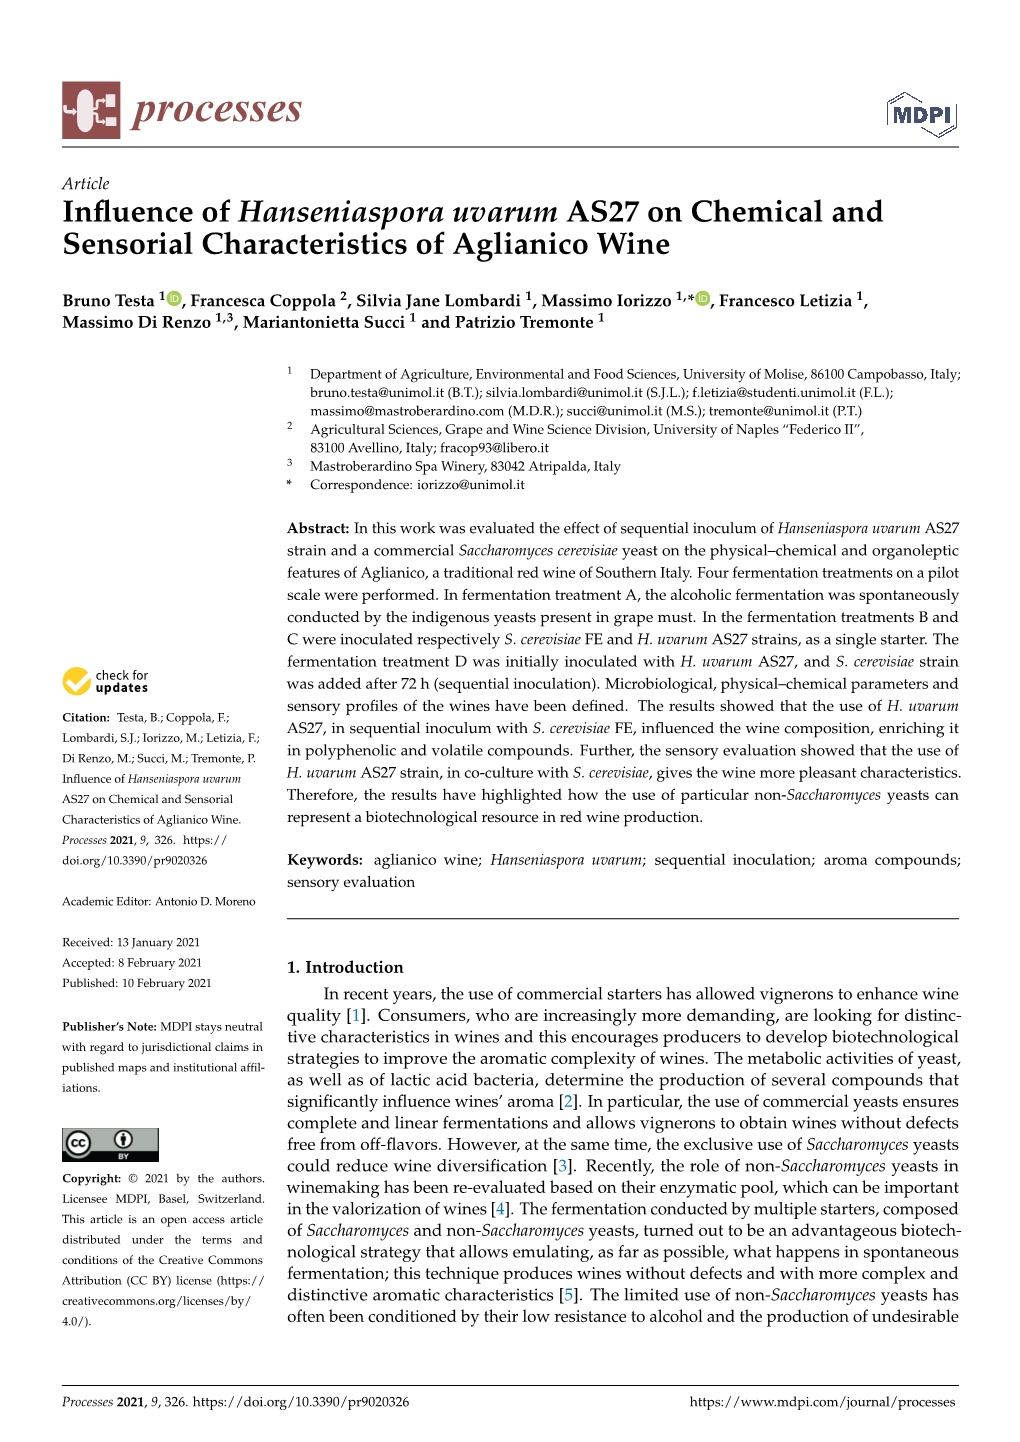 Influence of Hanseniaspora Uvarum AS27 on Chemical and Sensorial